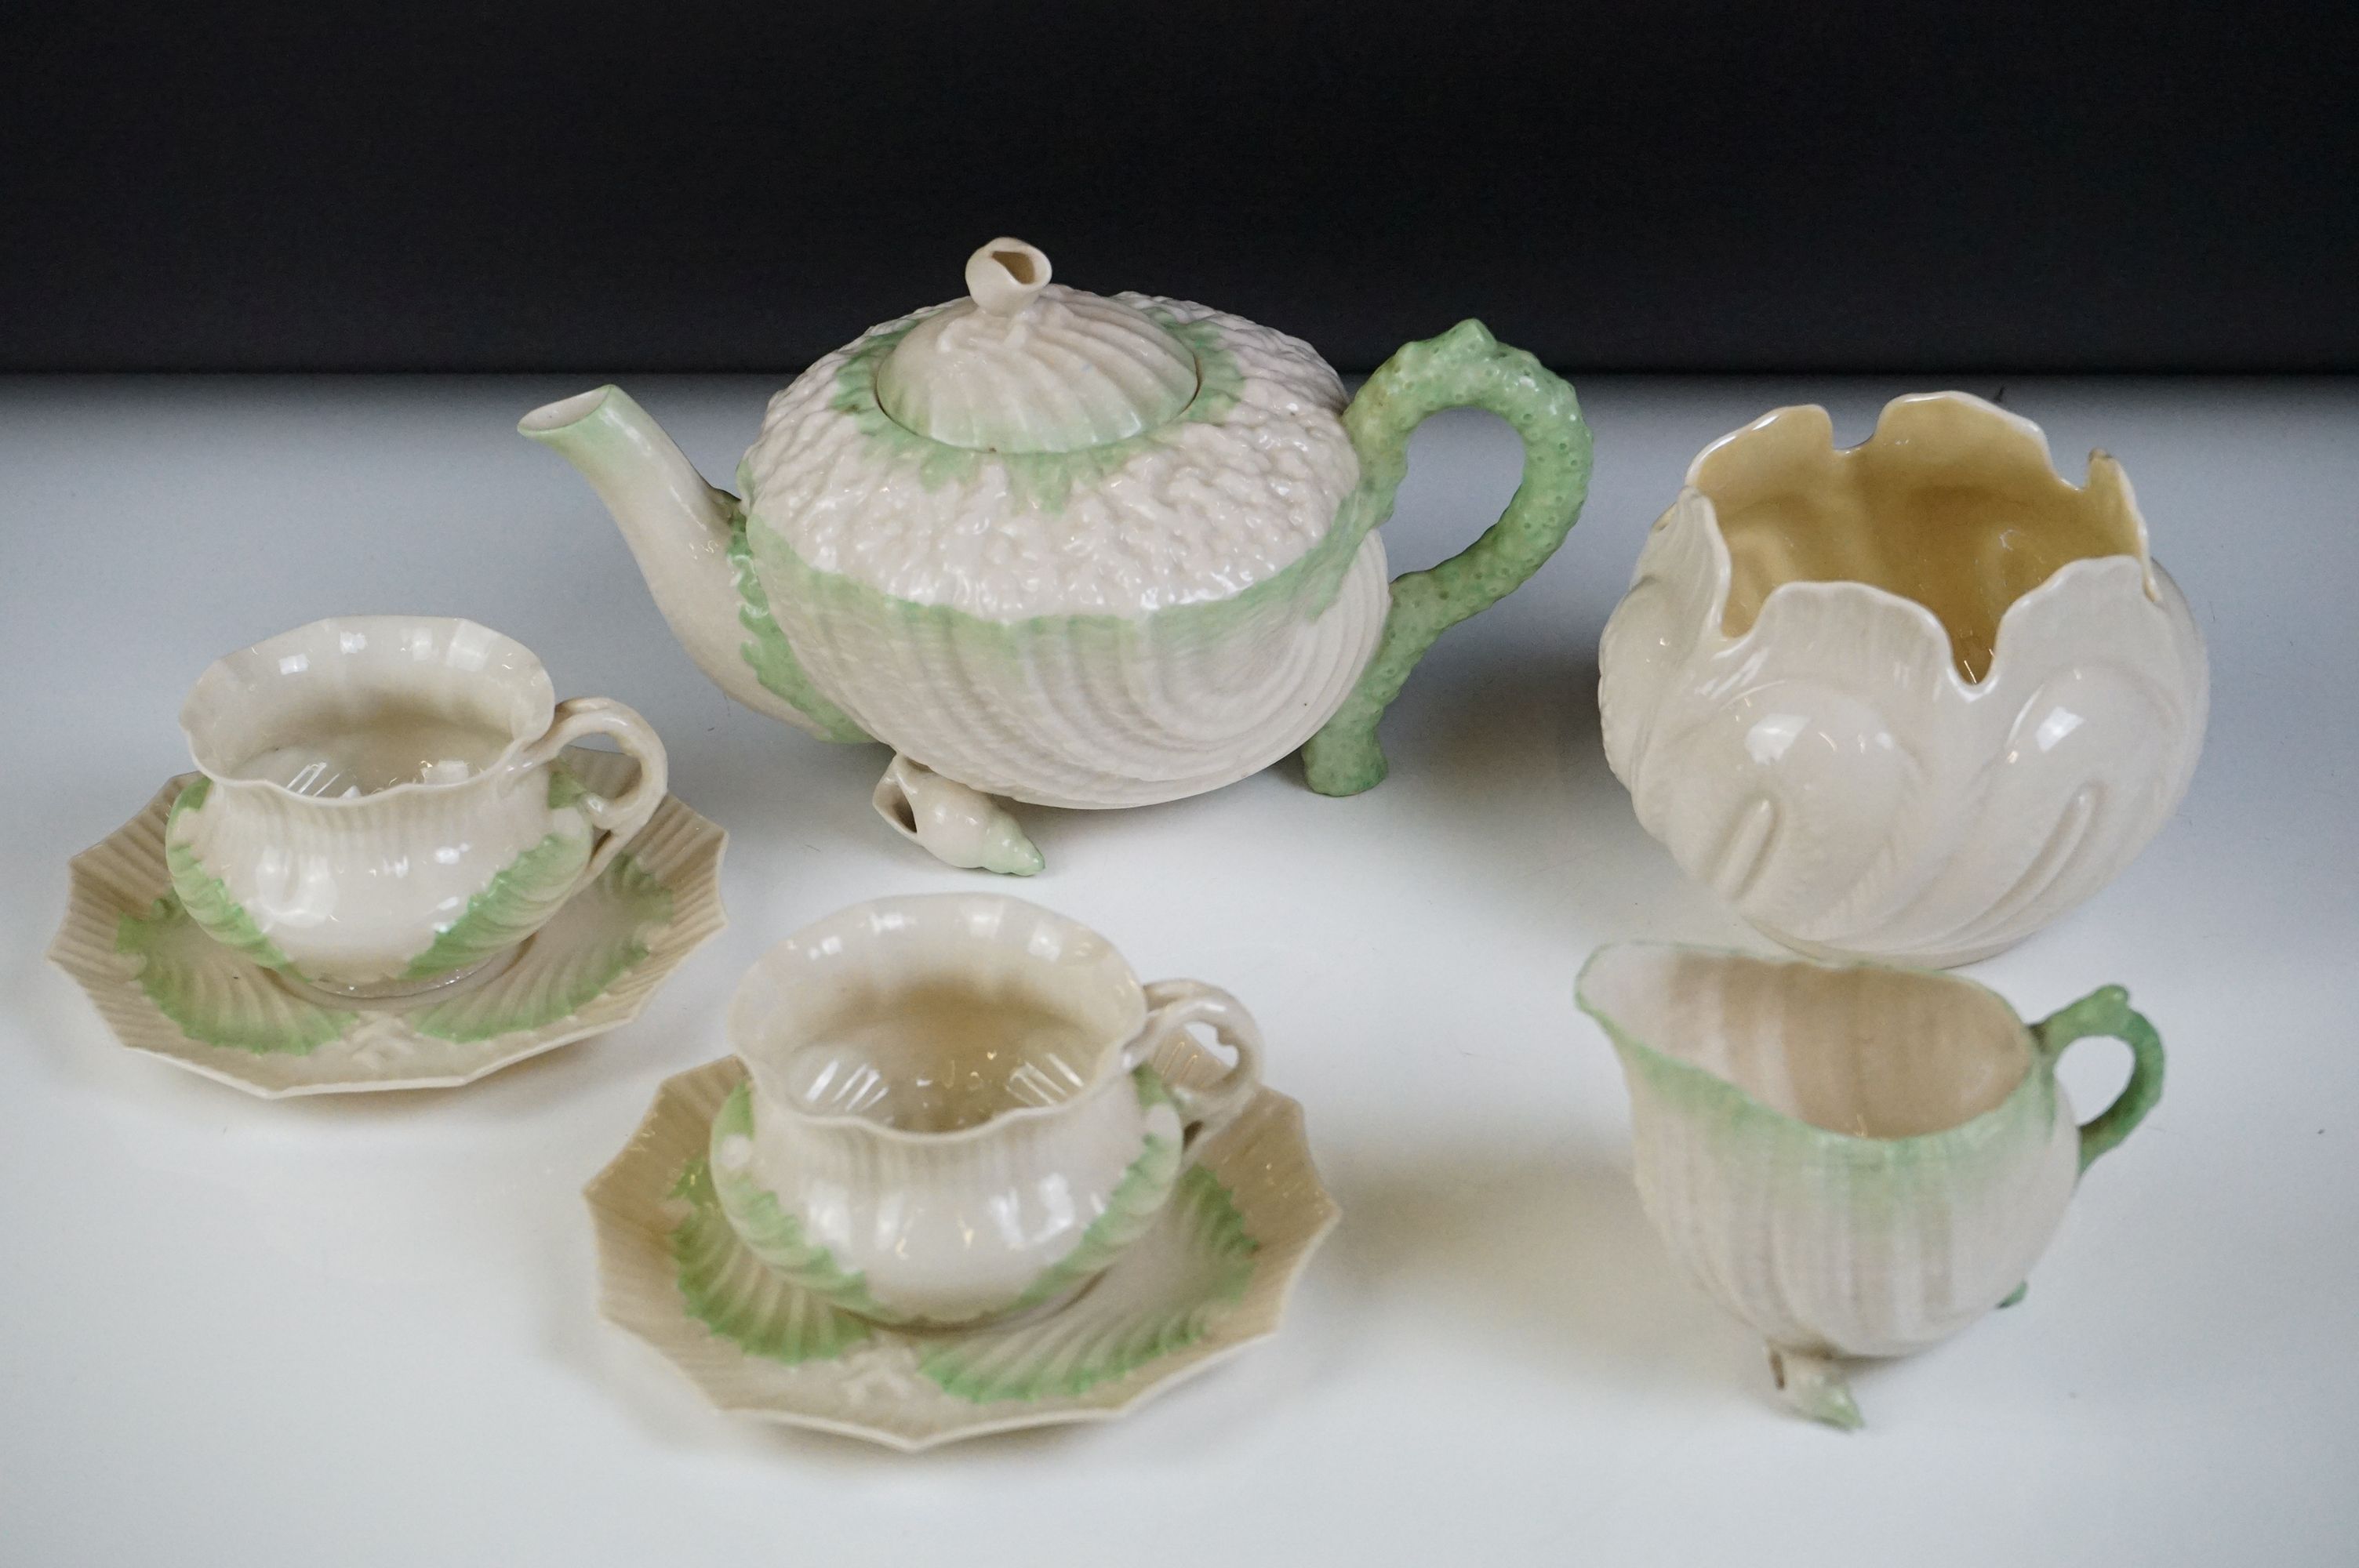 Belleek porcelain tea ware comprising Green Neptune pattern (teapot & cover and milk jug), 2 teacups